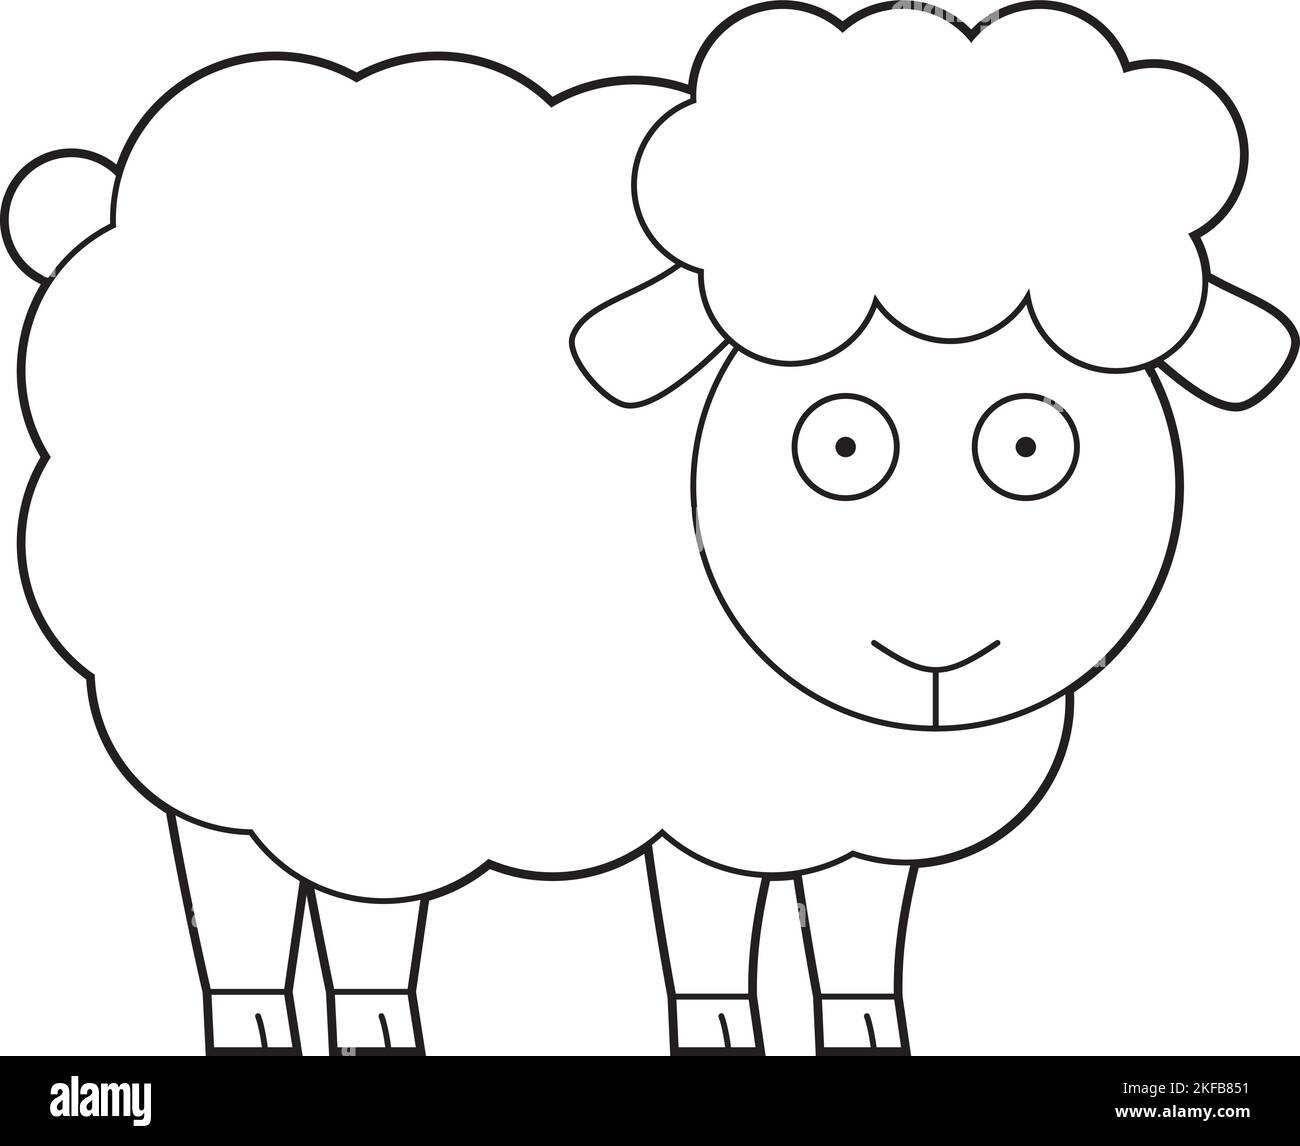 Easy coloring cartoon vector illustration of a sheep Stock Vector